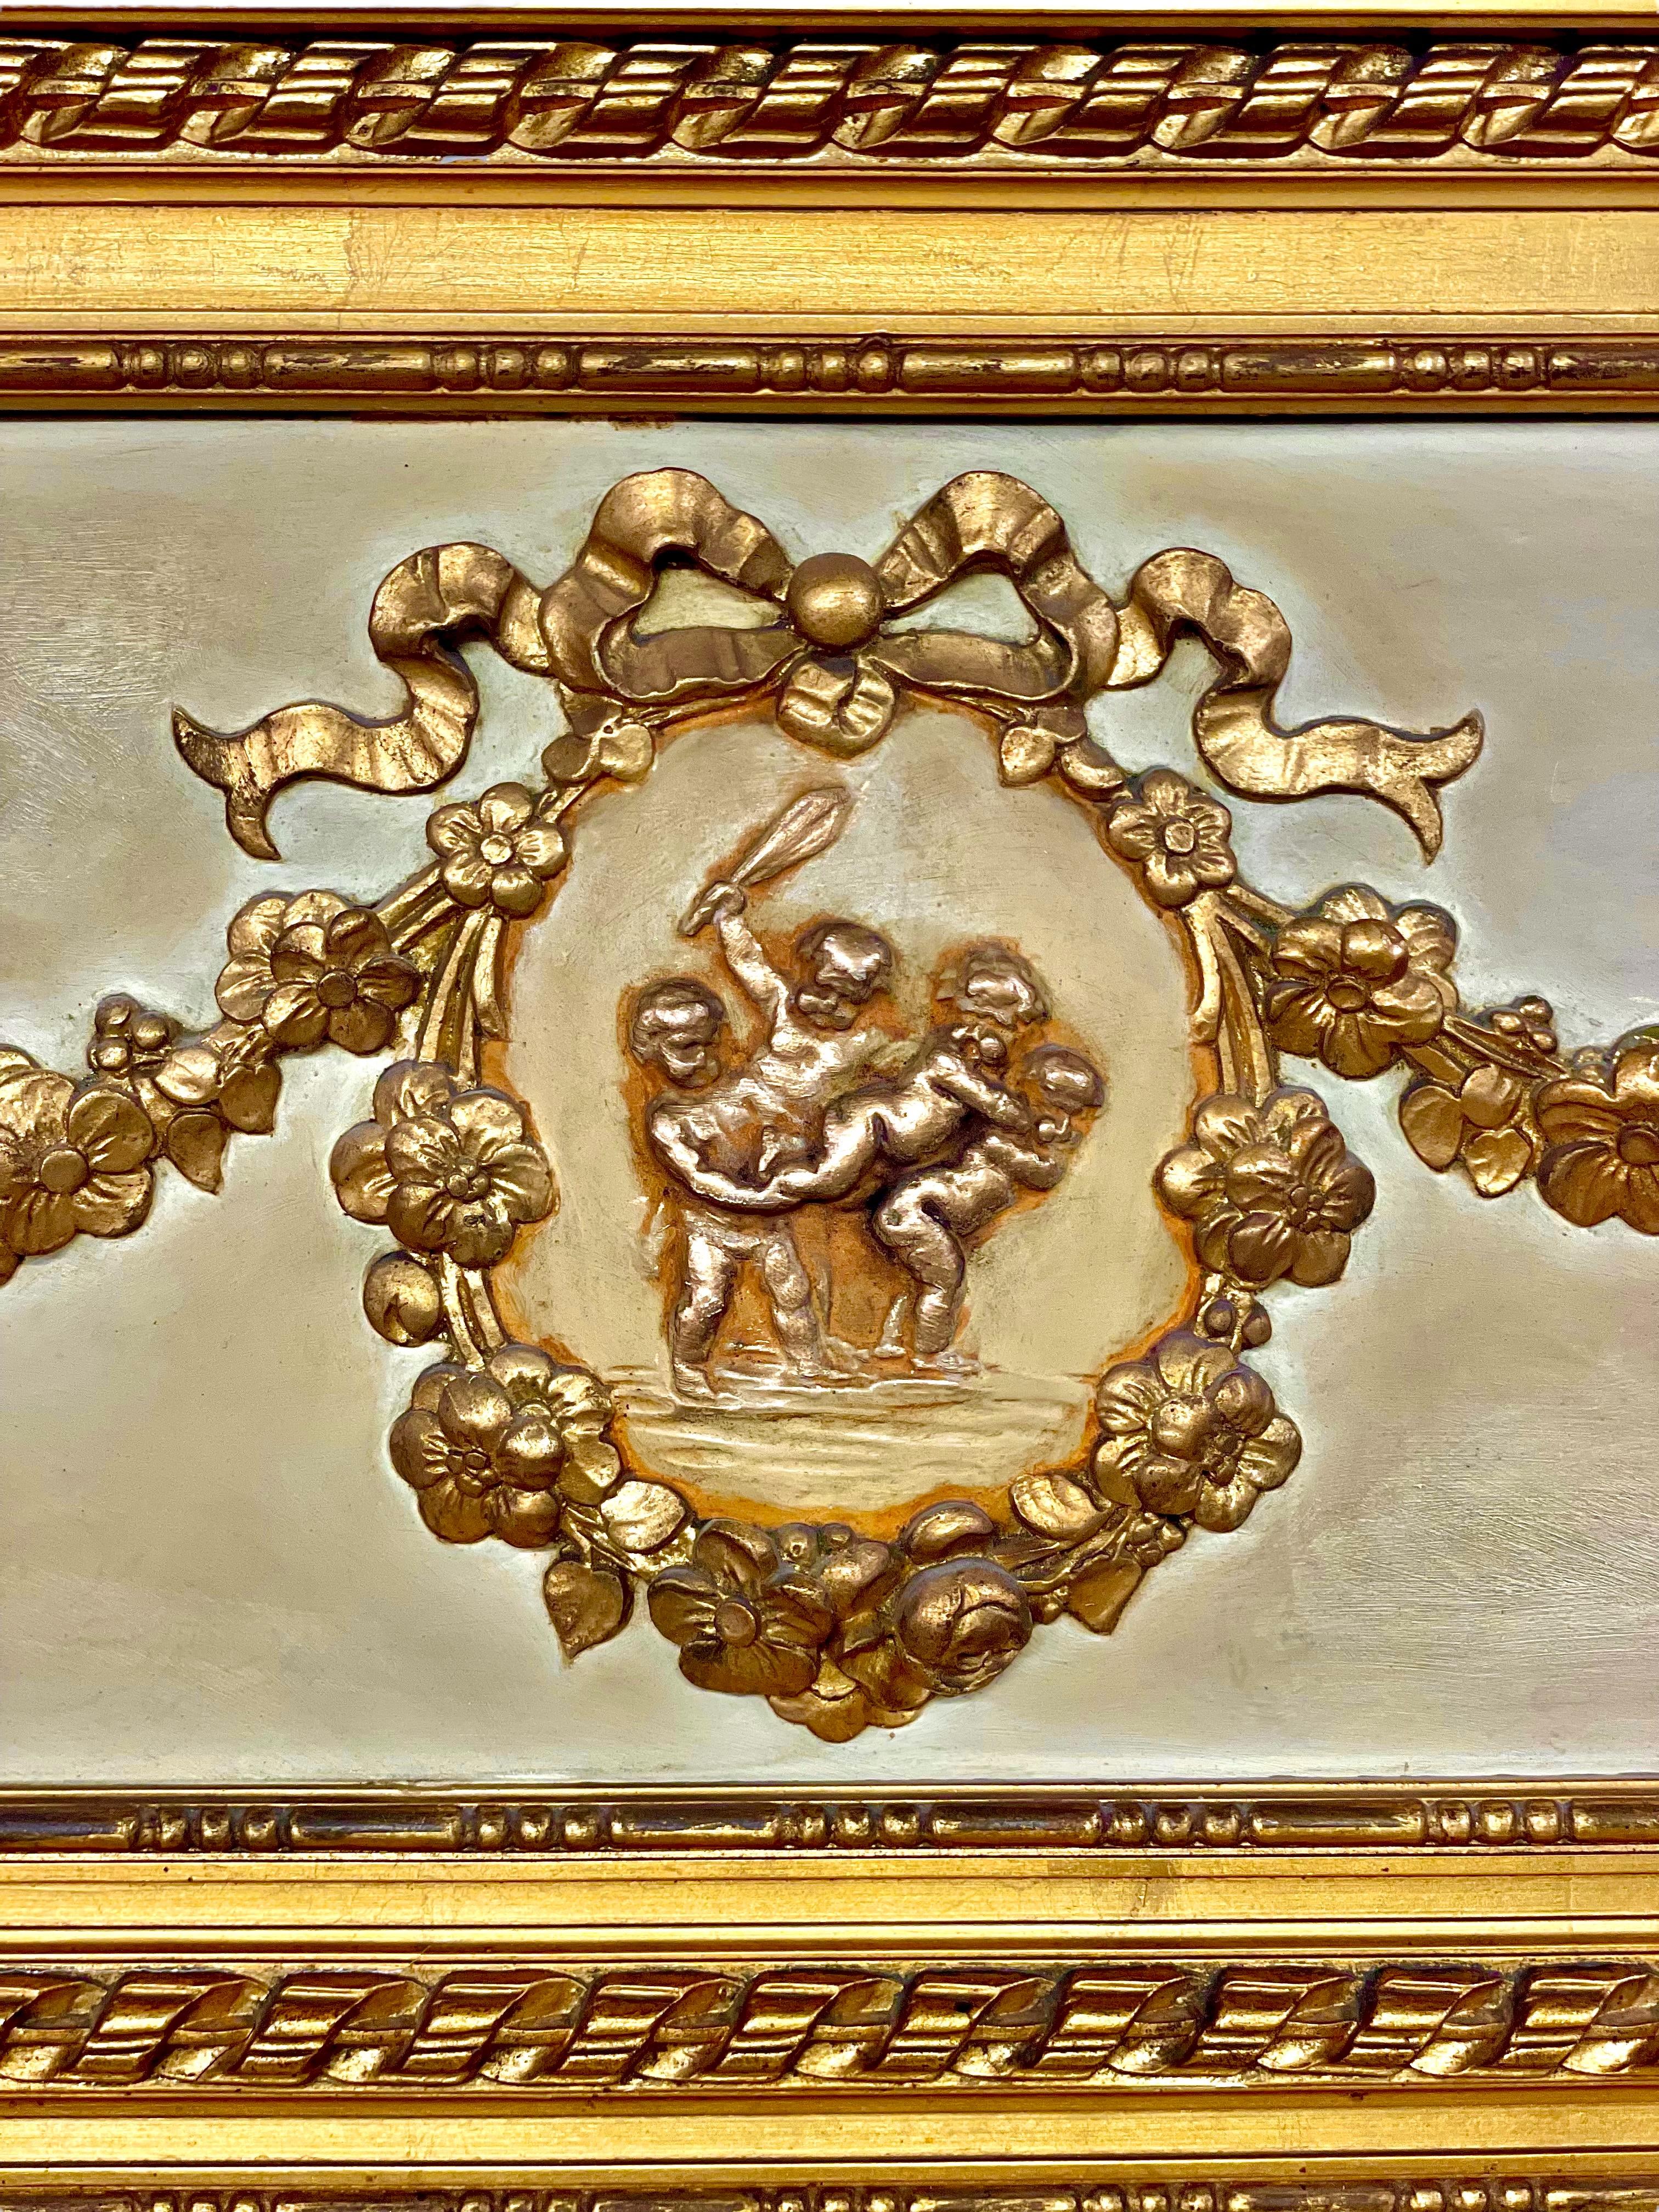  19th Century Louis XVI Trumeau Gilded Mirror with Mischievous Cherubs Design For Sale 4